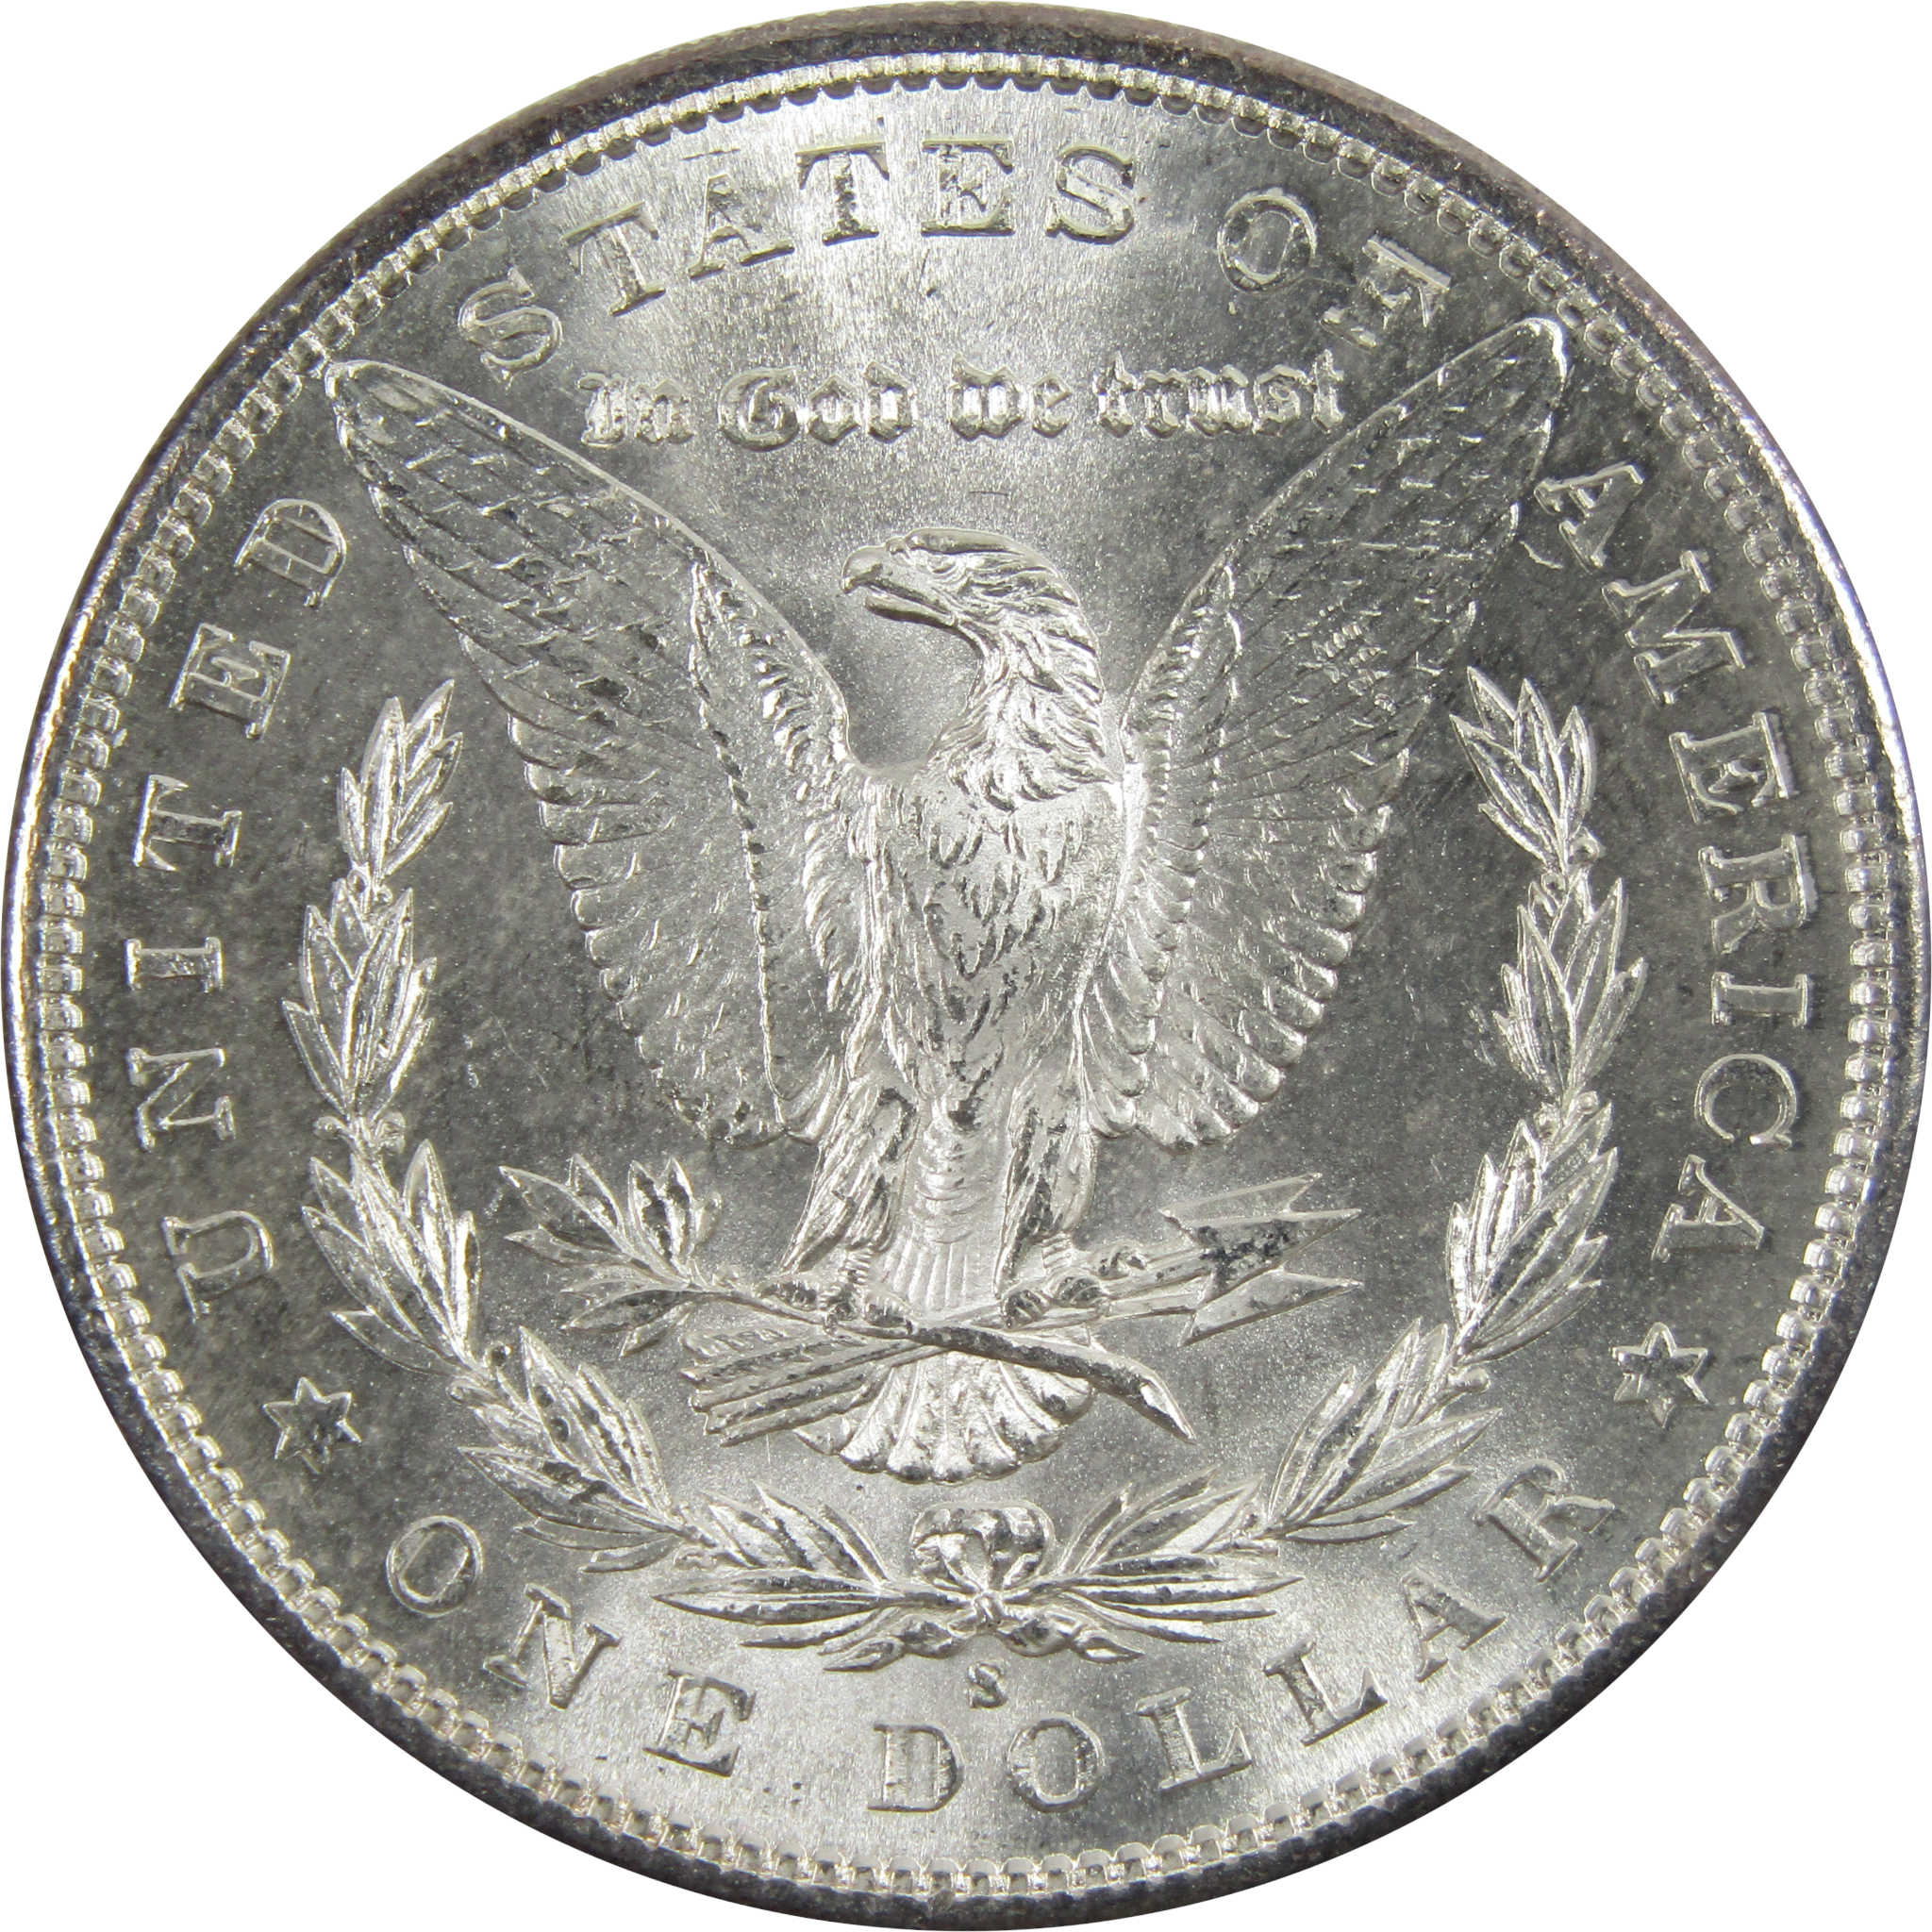 1881 S Morgan Dollar BU Uncirculated 90% Silver $1 Coin SKU:I5326 - Morgan coin - Morgan silver dollar - Morgan silver dollar for sale - Profile Coins &amp; Collectibles